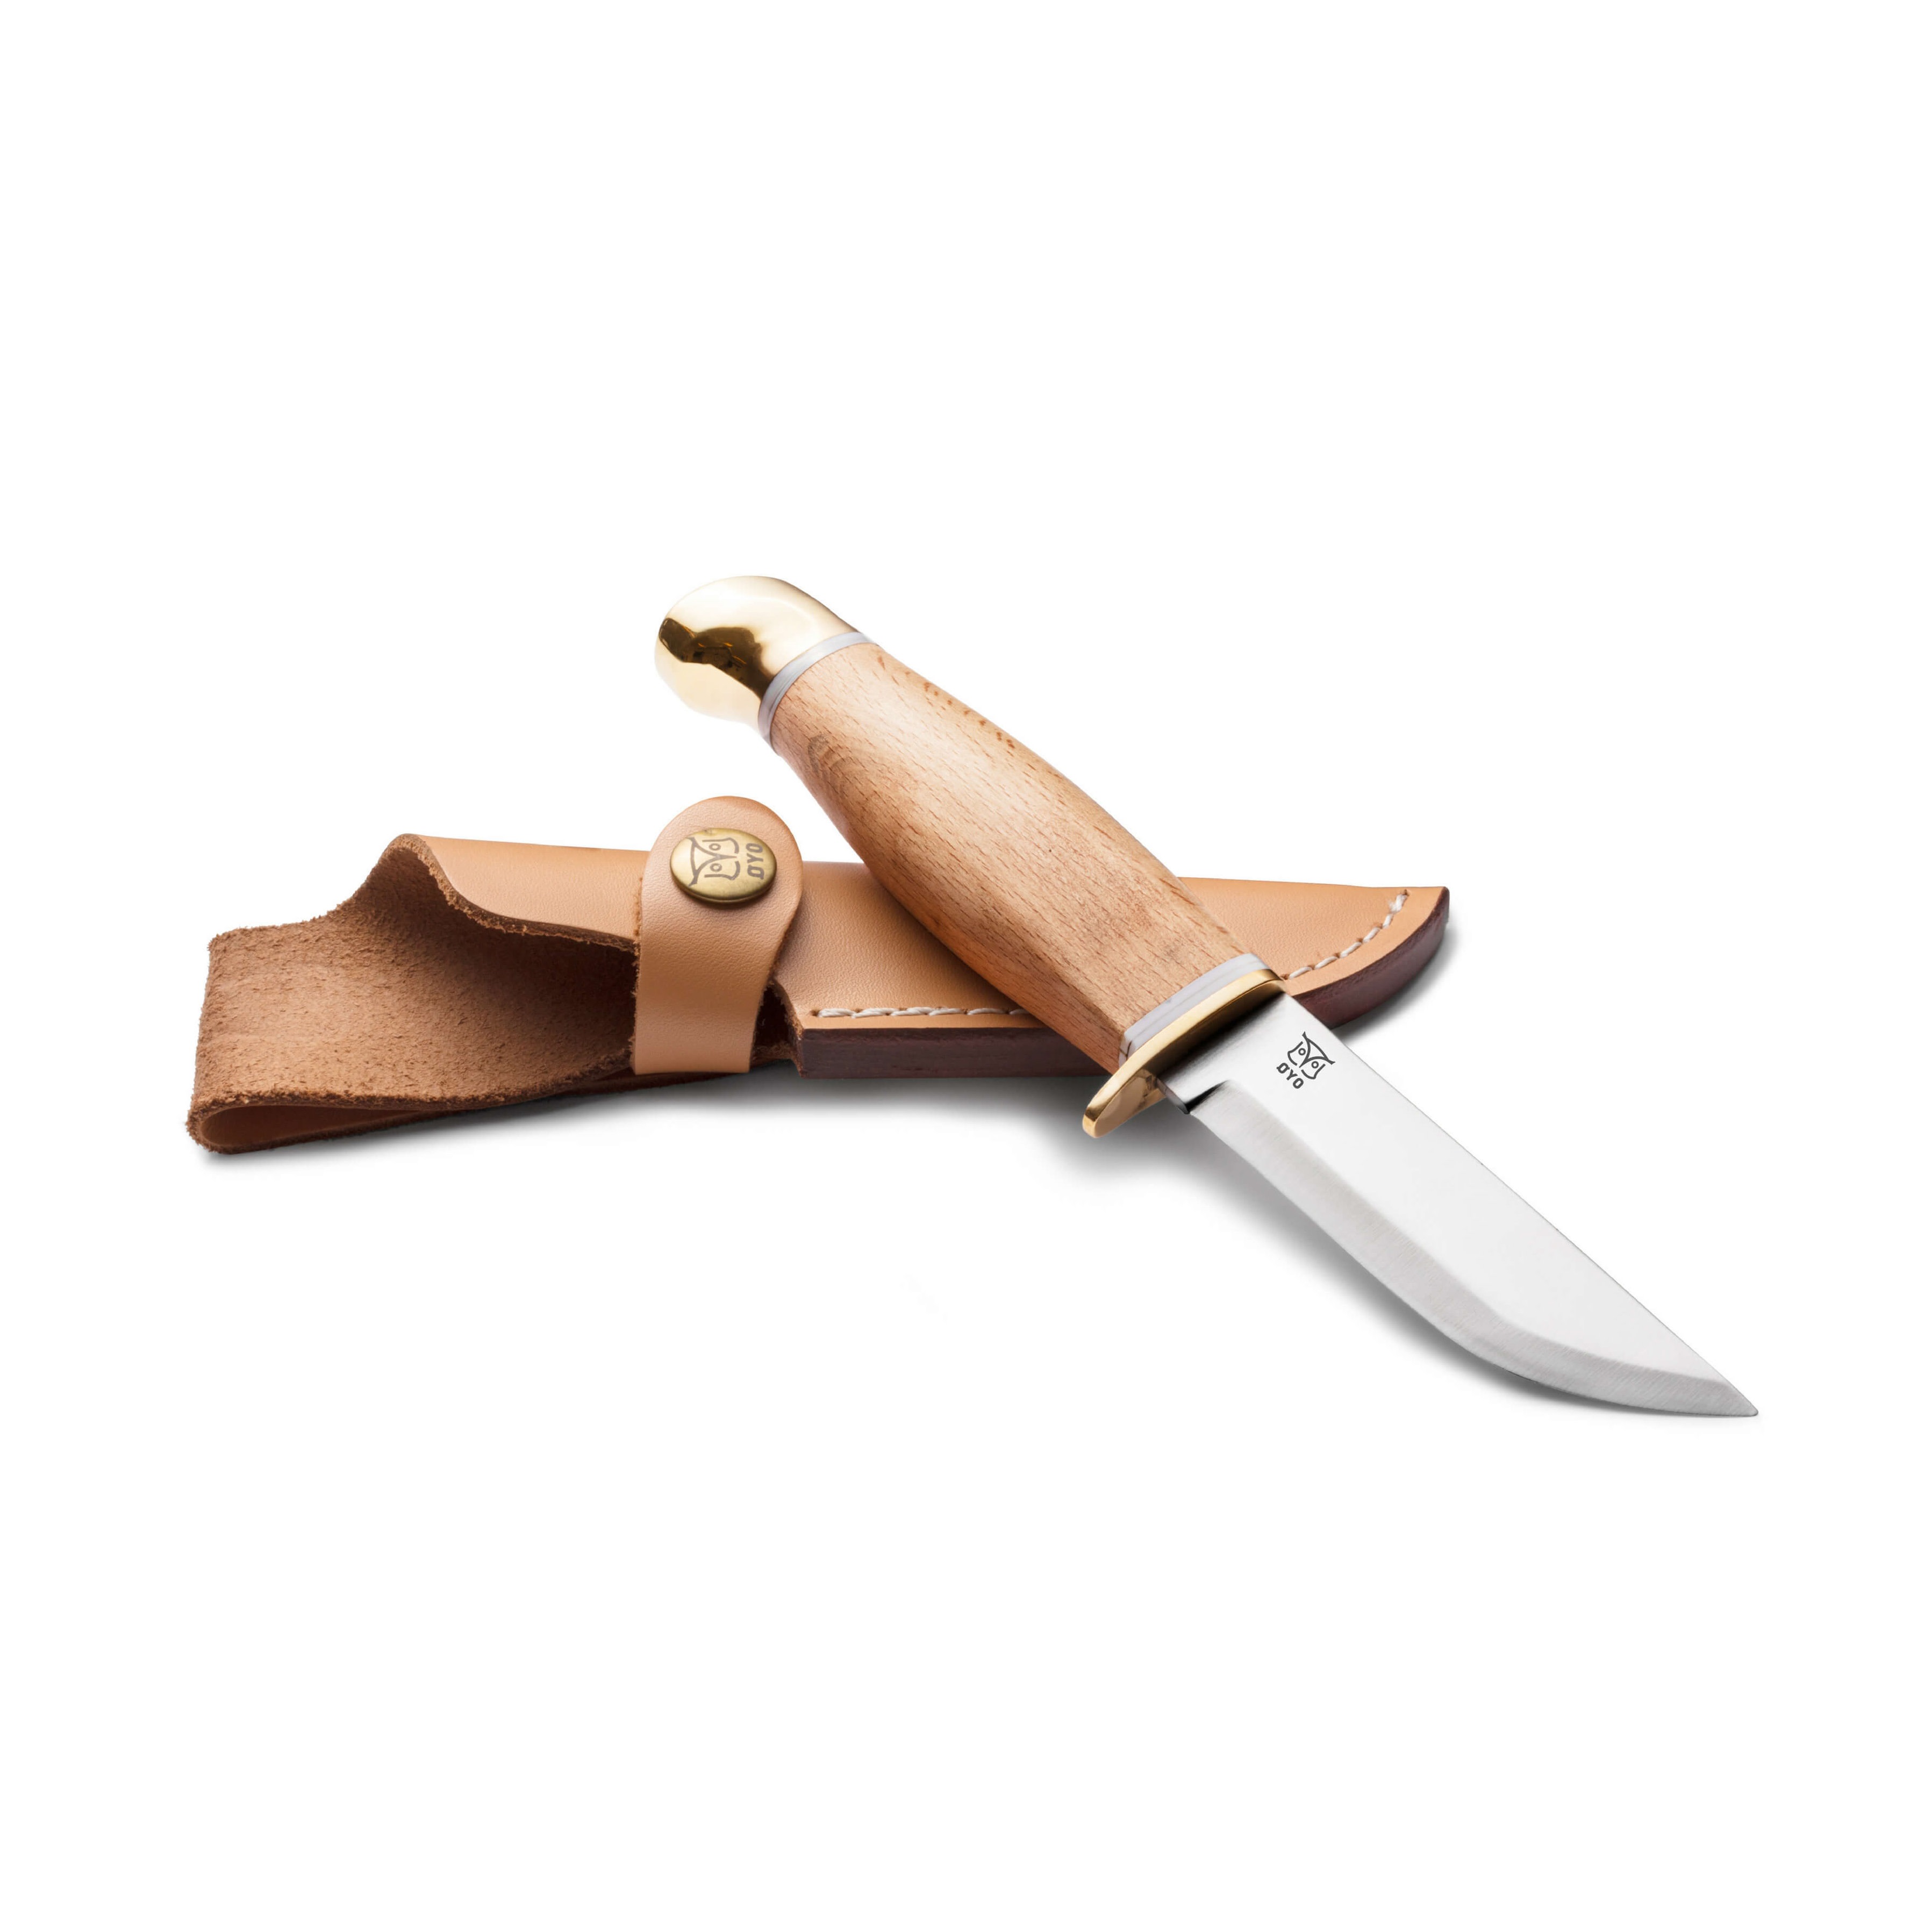 Øyo Jotunheimen Knife W/Leather Sheath